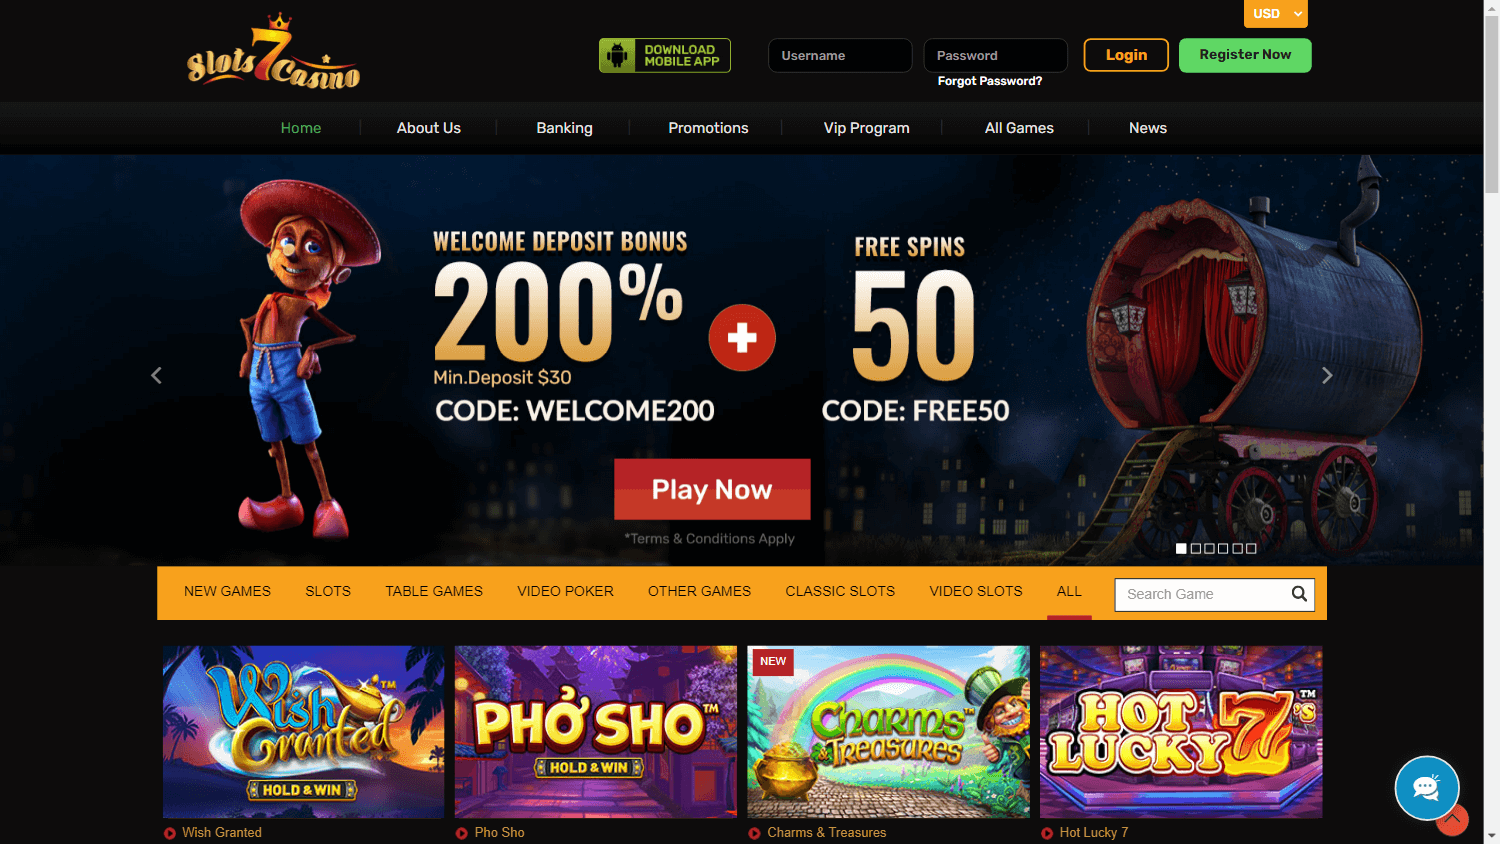 slots_7_casino_homepage_desktop